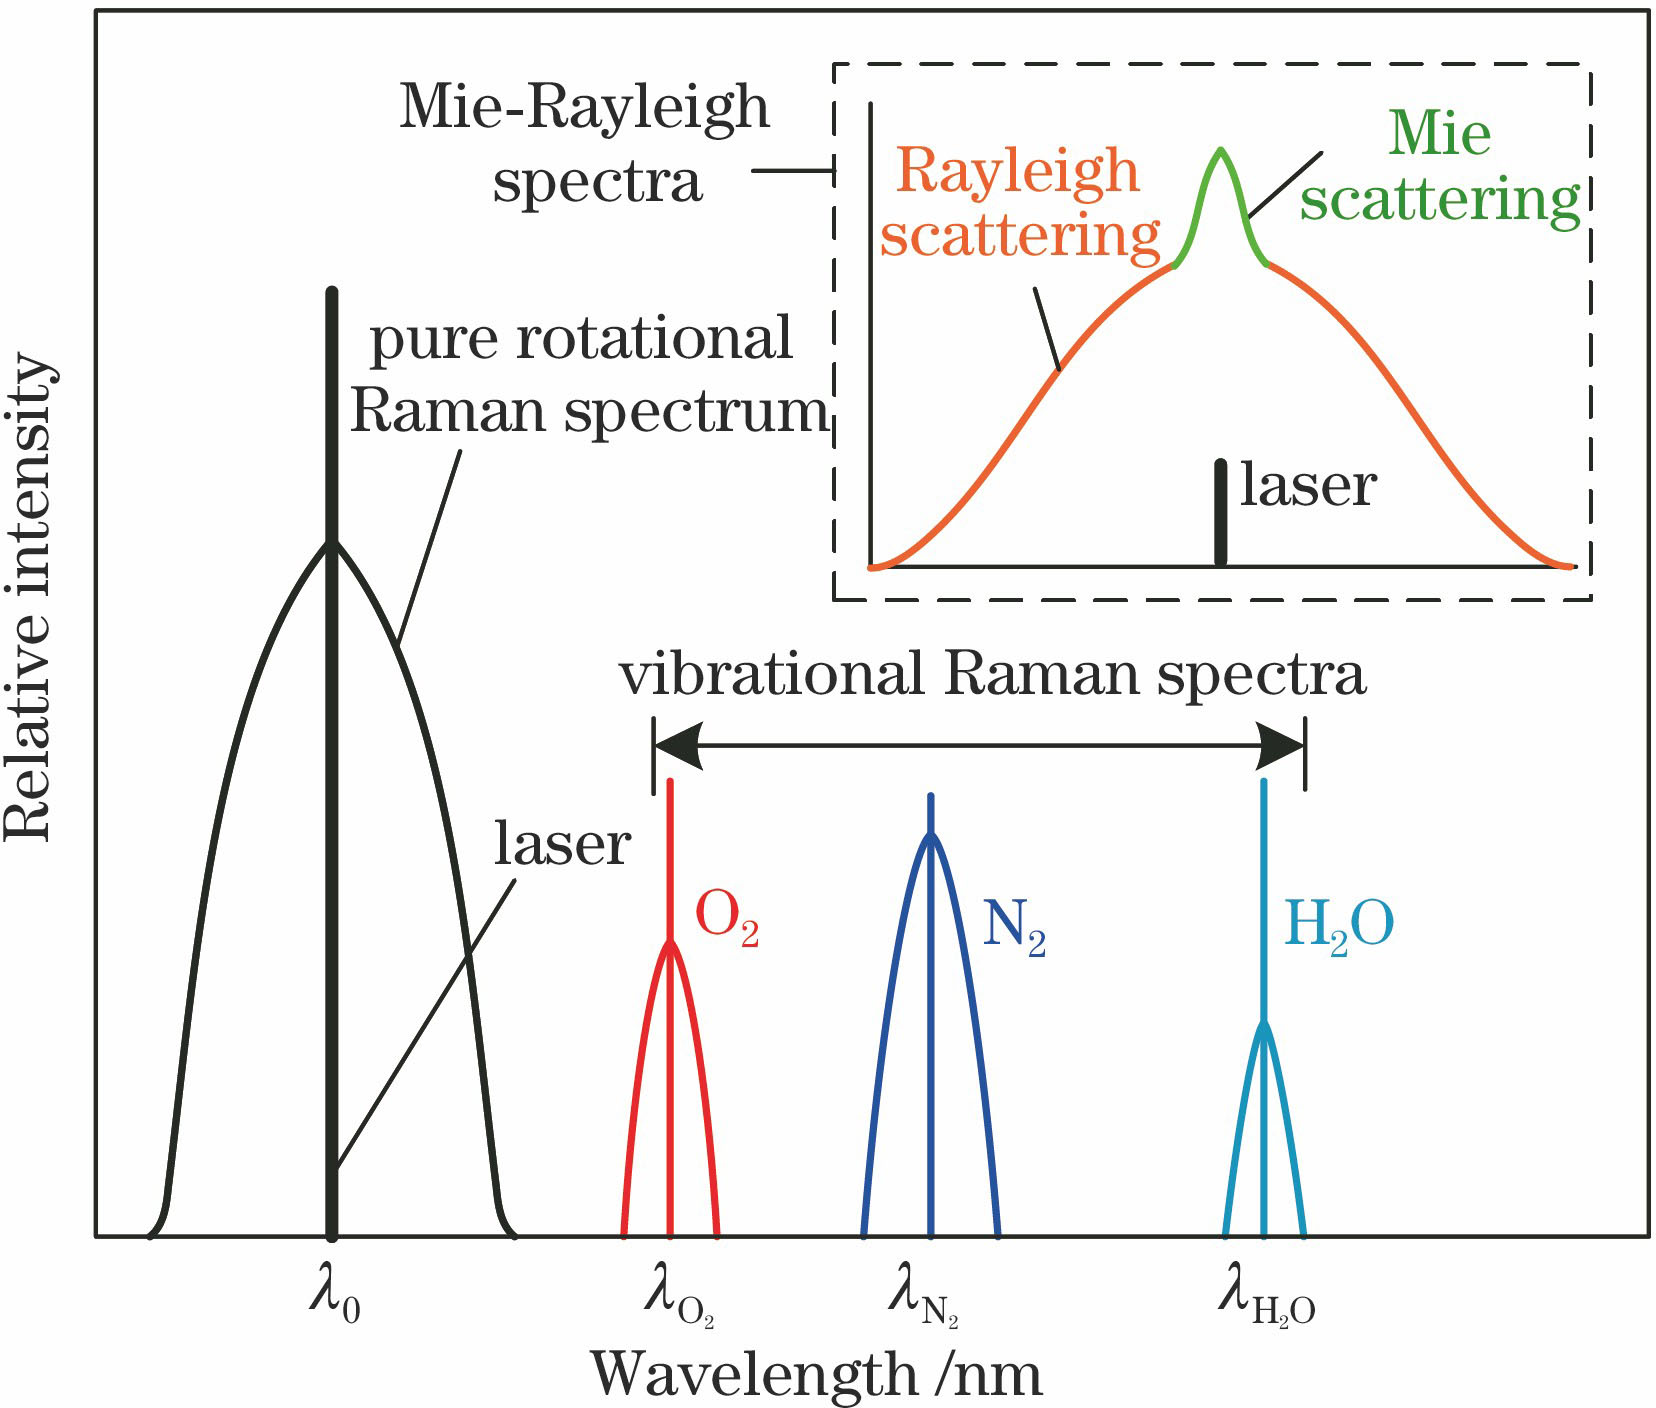 Spectrum of atmospheric backscattering signal